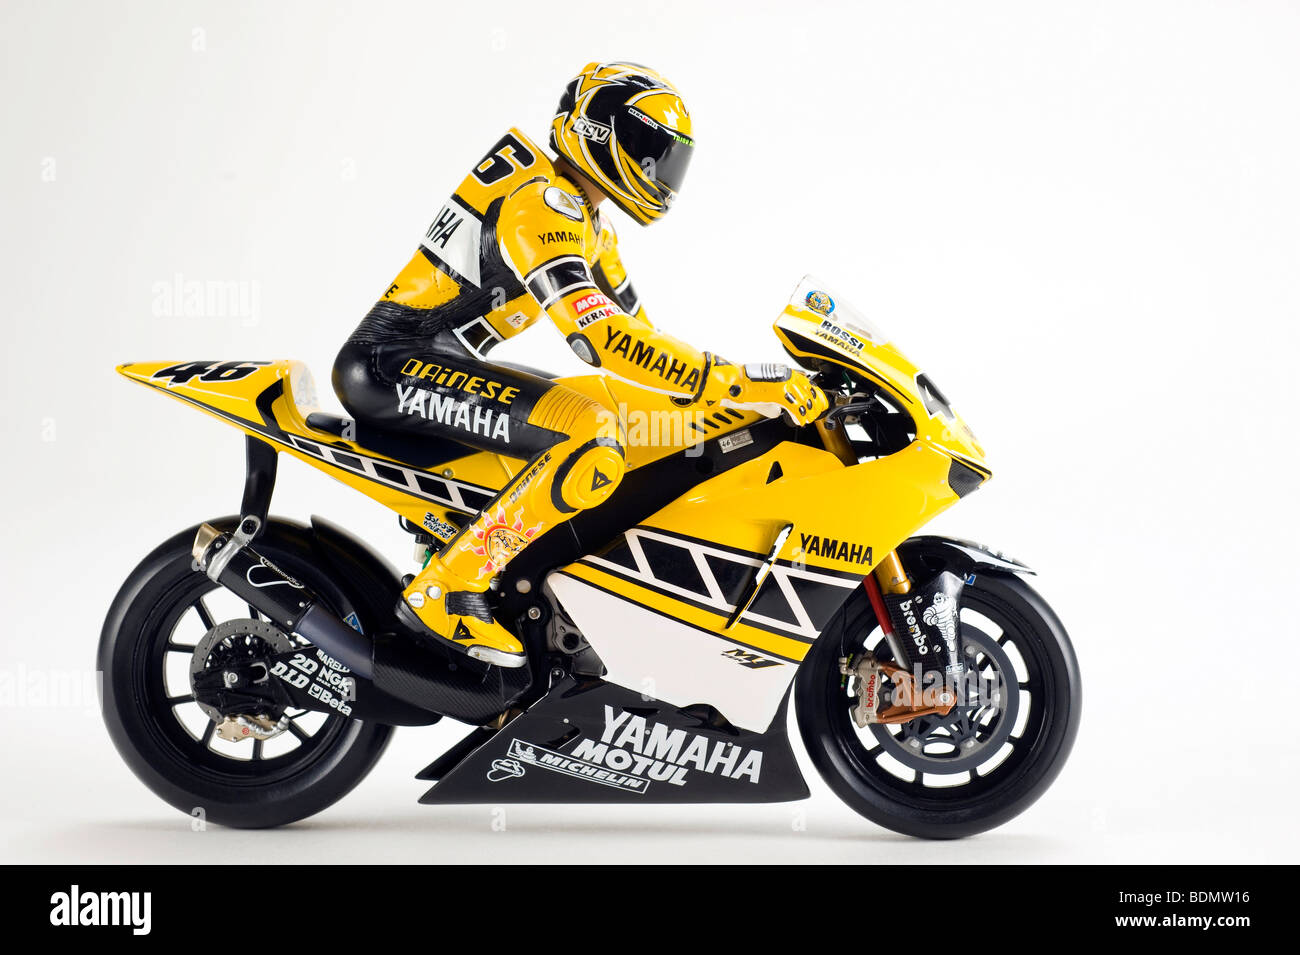 Yamaha racing hi-res stock photography and images - Alamy